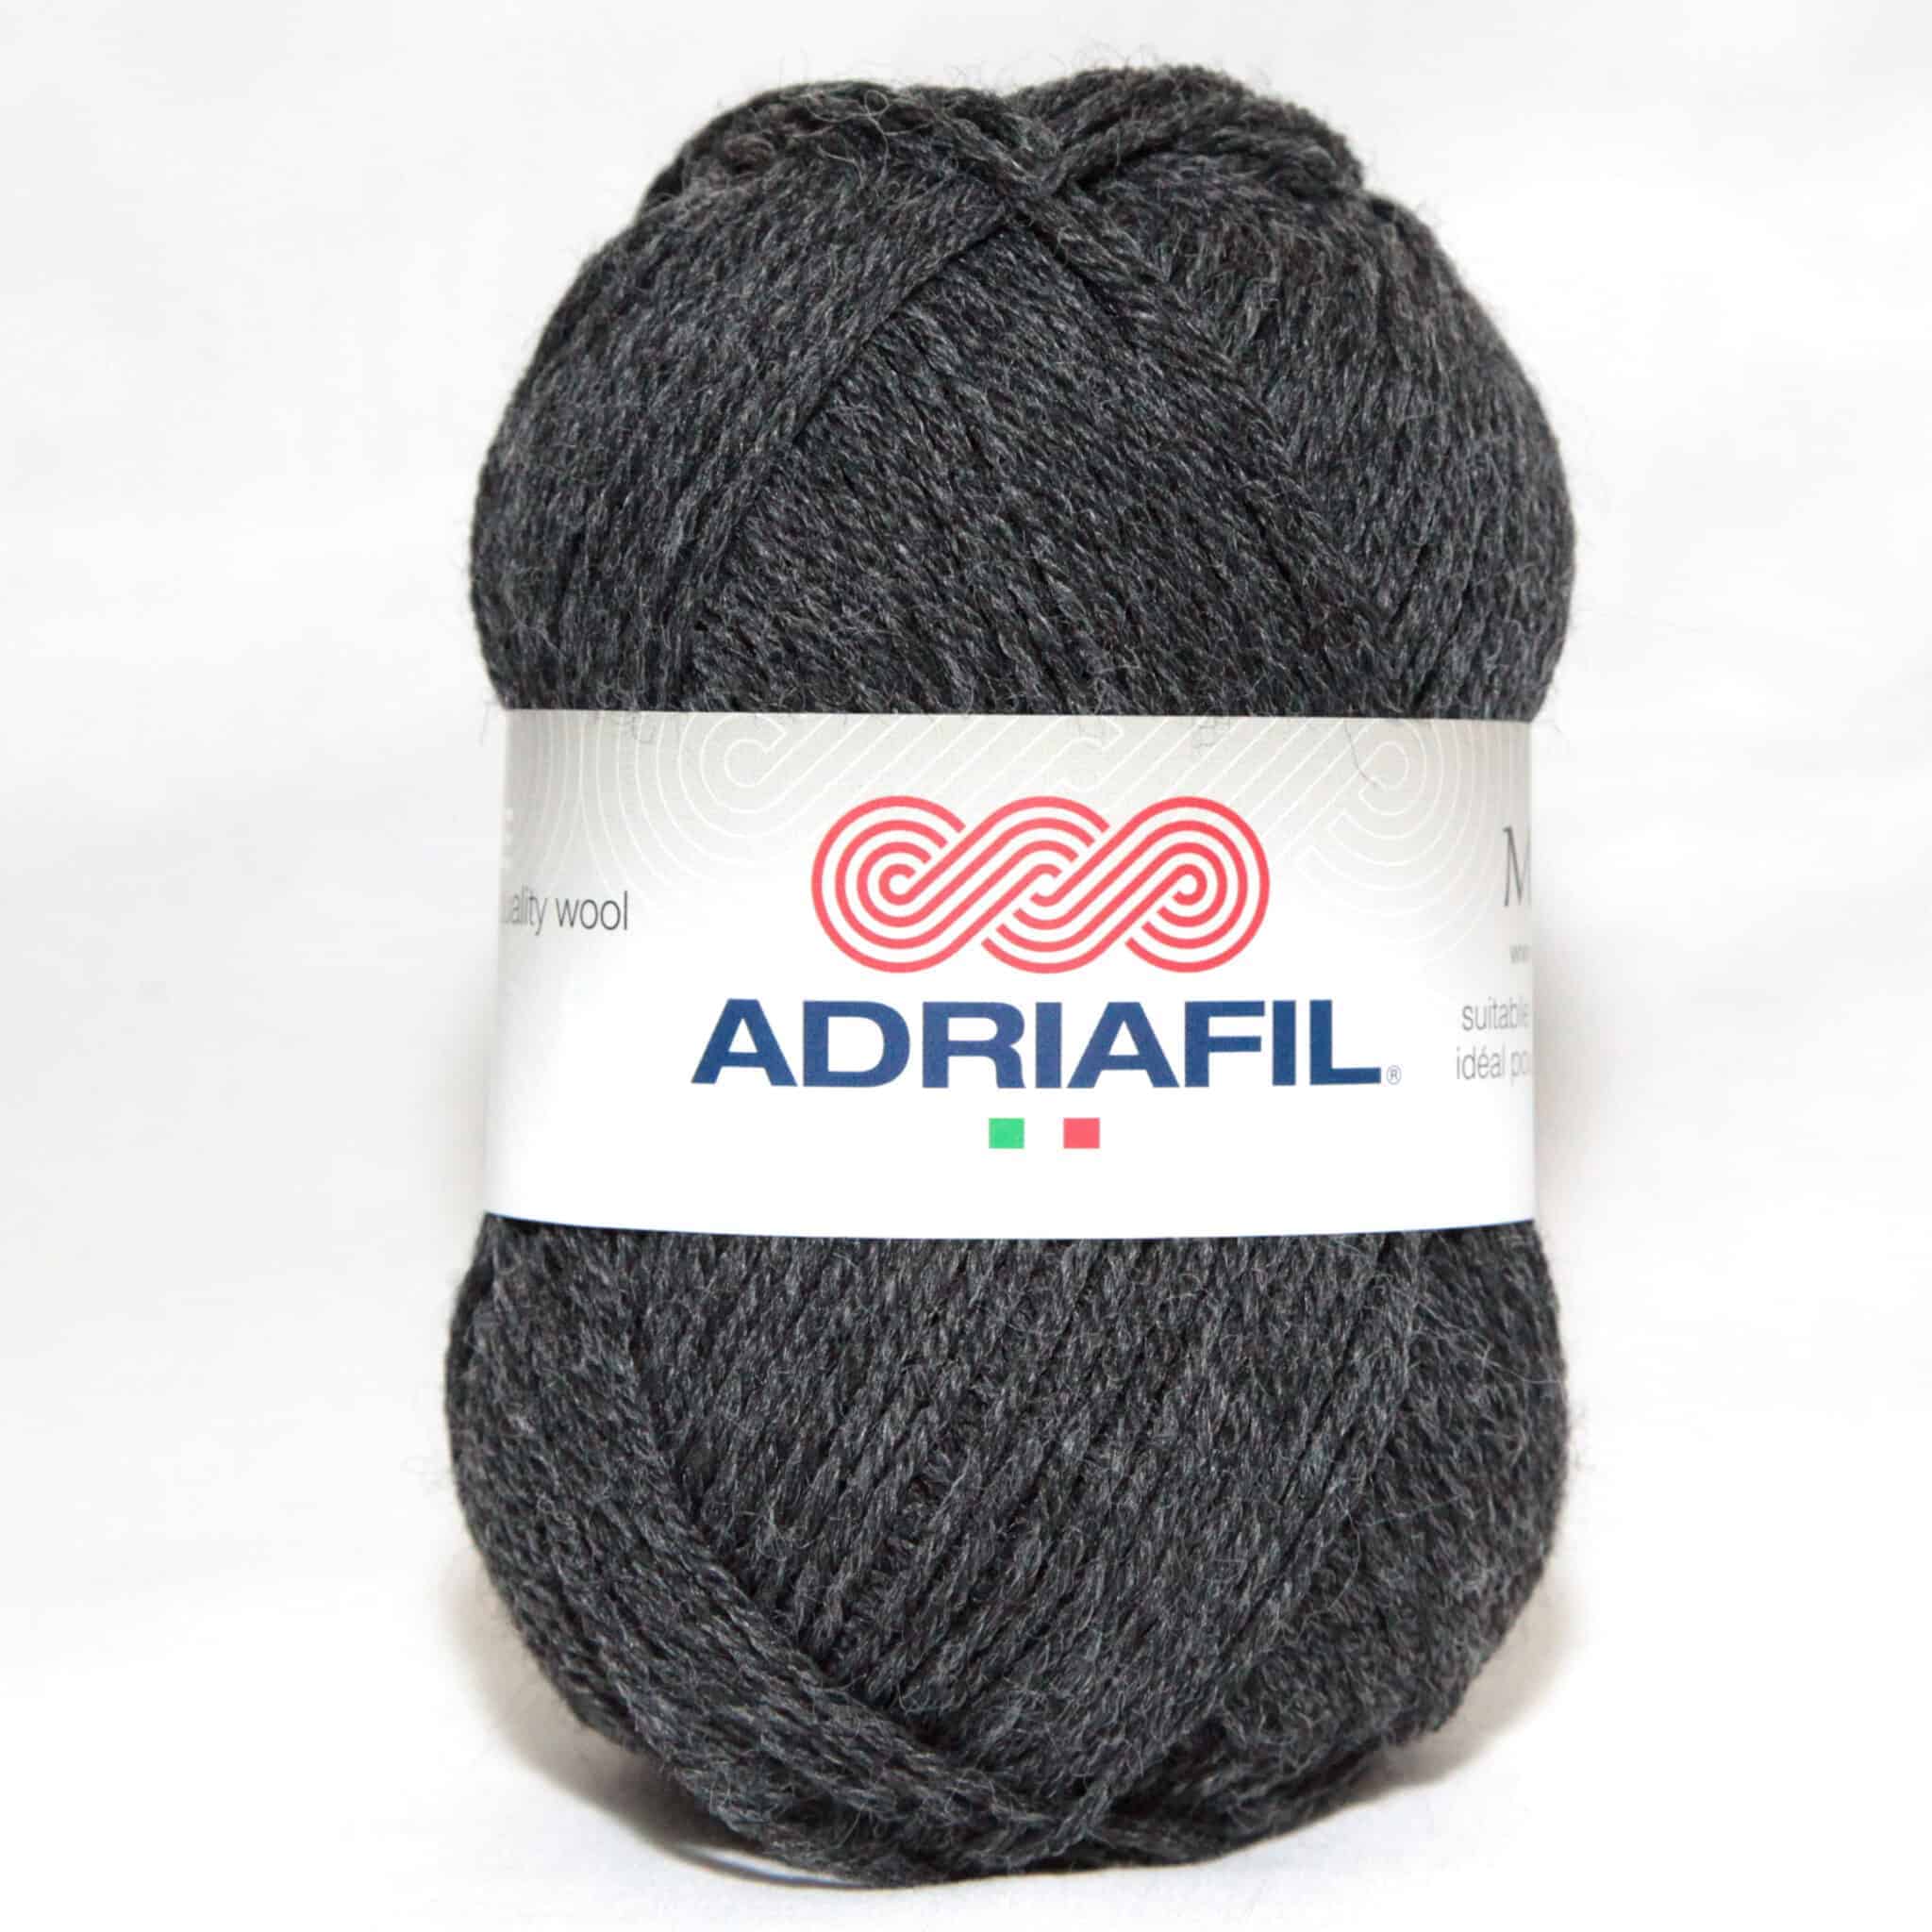 Yarn - Adriafil Mirage DK in Anthracite Grey Melange Colour 54